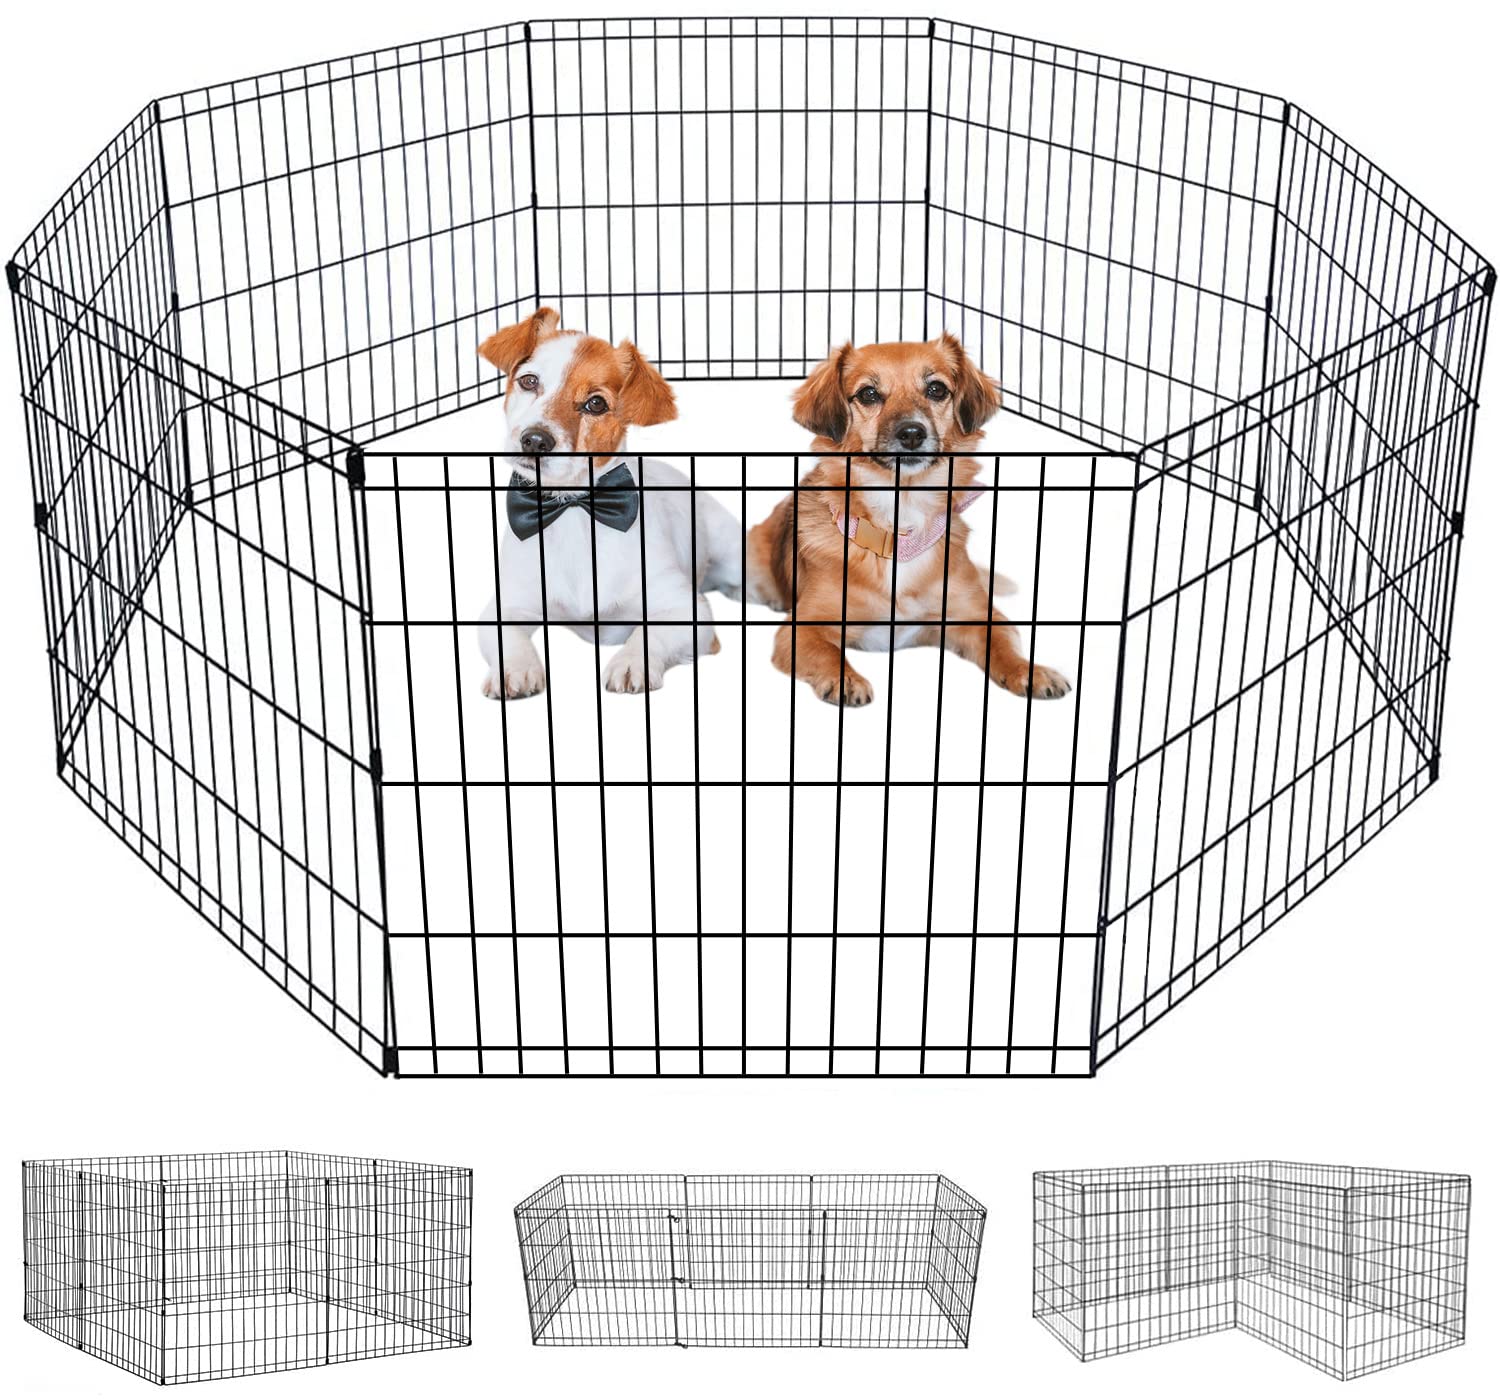 BestPet Dog Pen Dog Playpen Puppy Pet Playpen 8 Panel Indoor Outdoor Metal Portable Folding Animal Exercise Dog Fence,24,Black